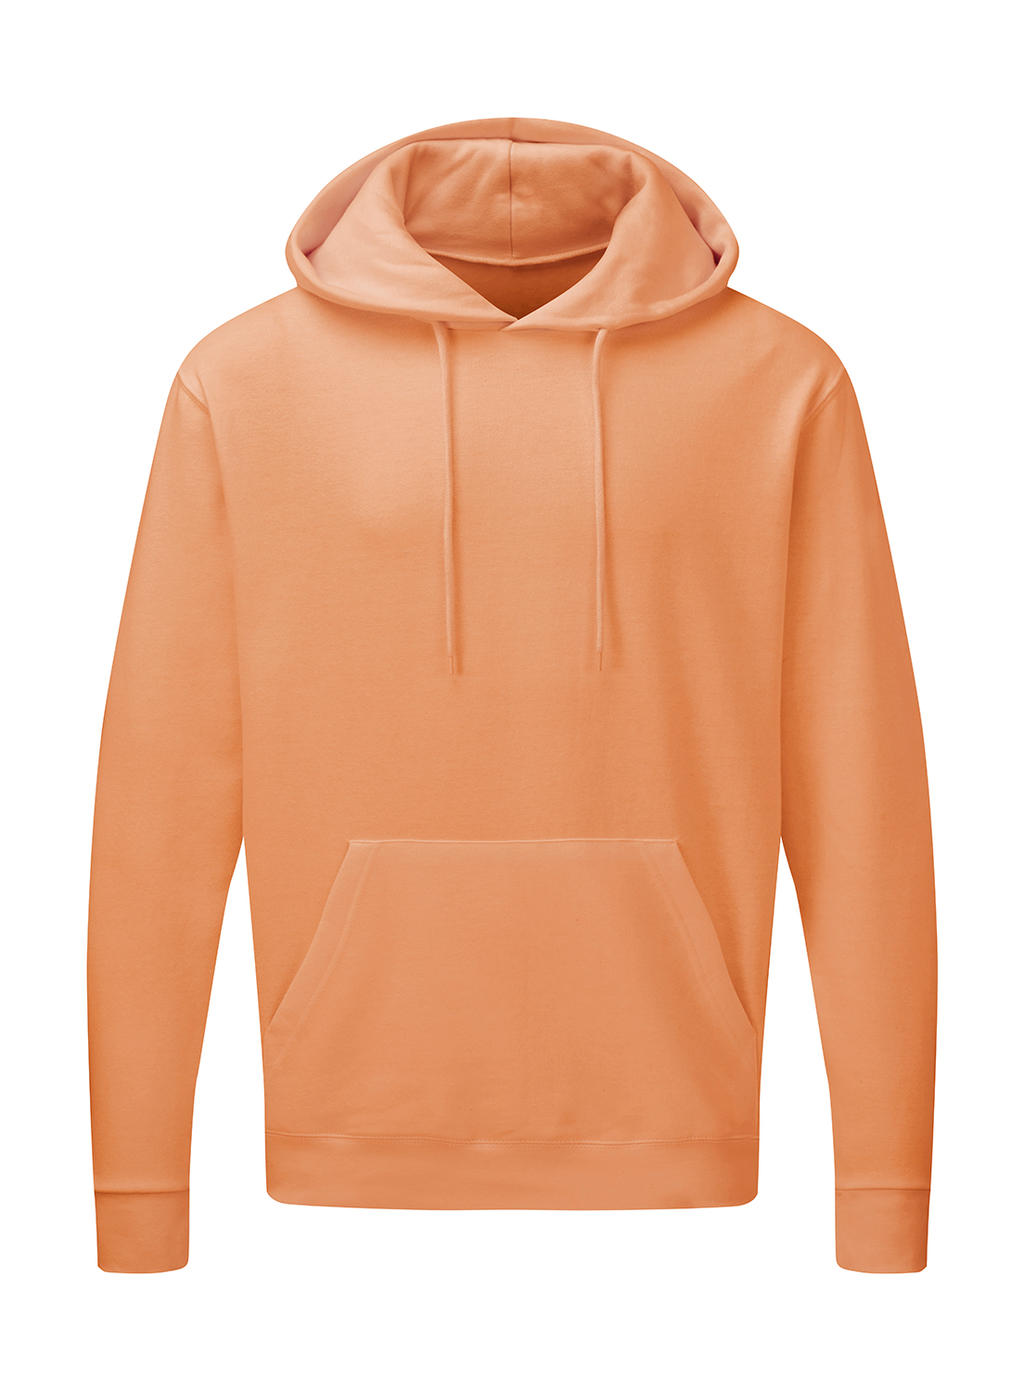  Mens Hooded Sweatshirt in Farbe Cantaloupe